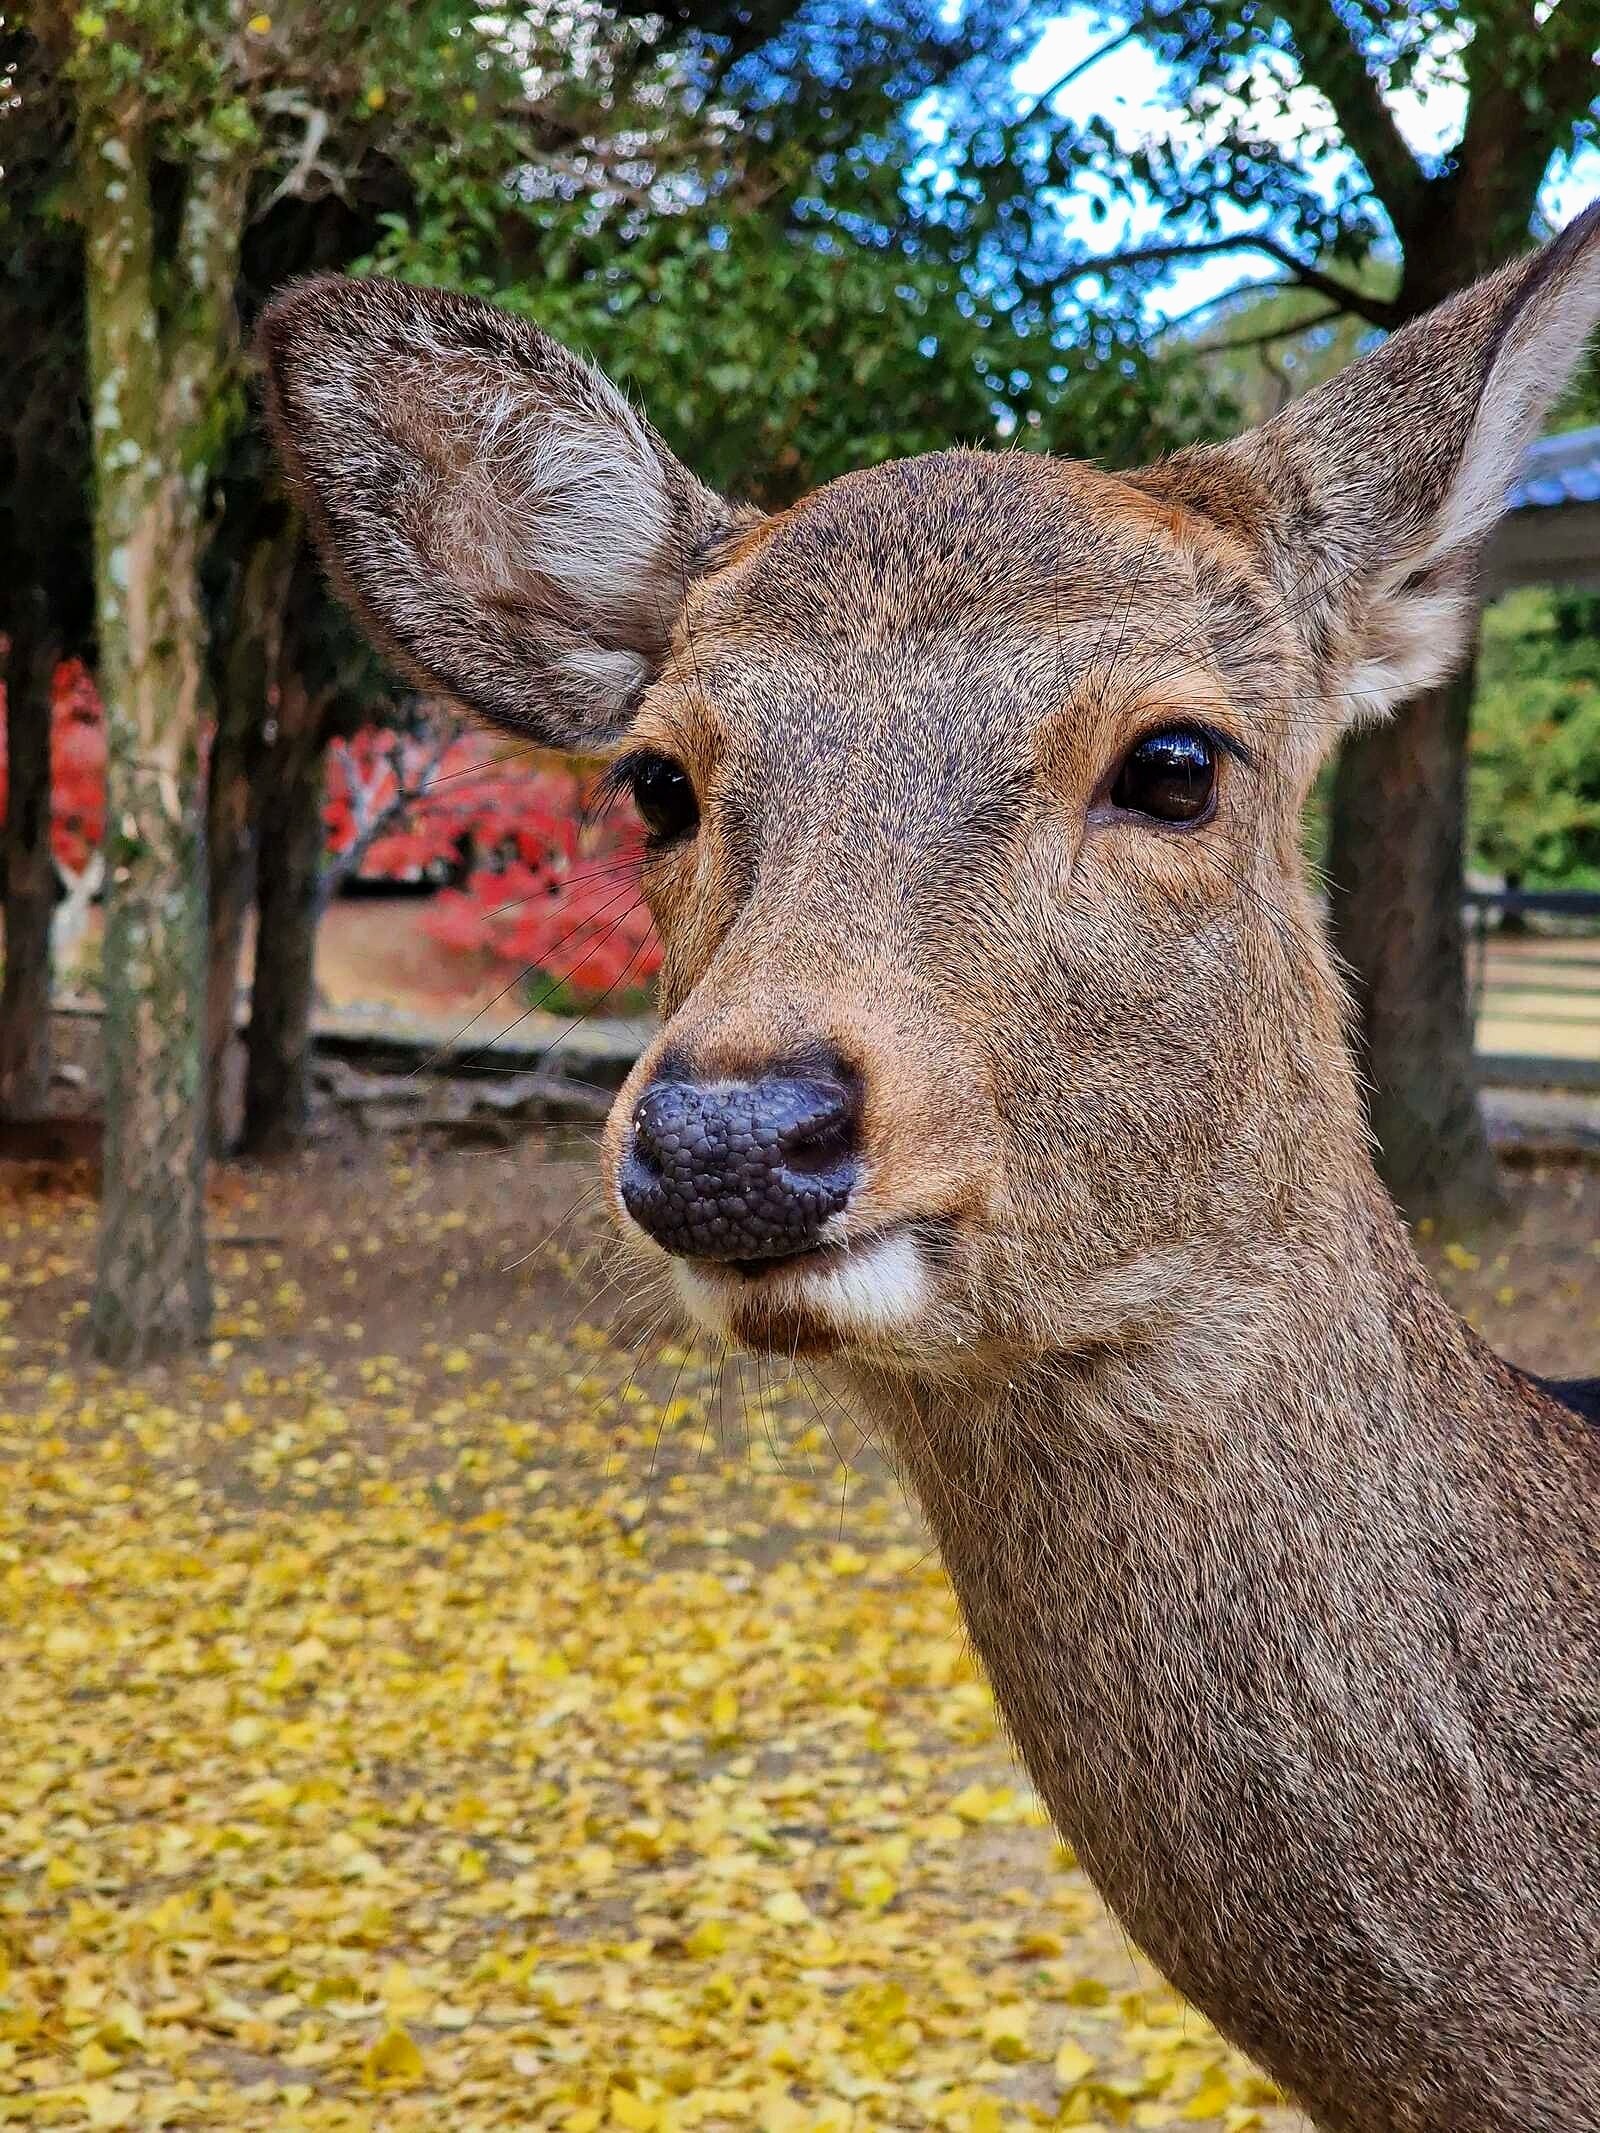 a close up of a deer's face in nara